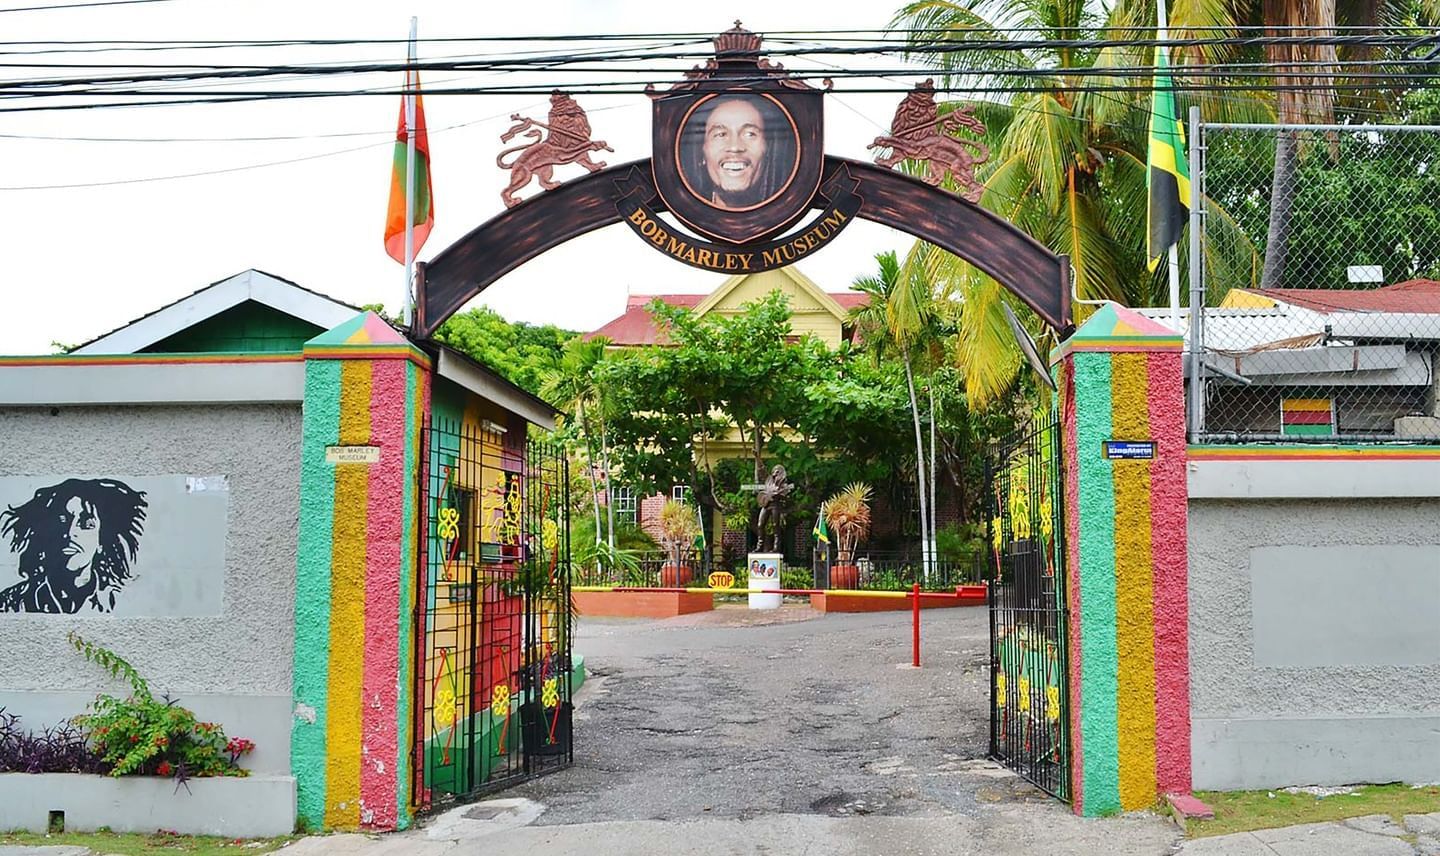 Entrance view of Bob Marley Museum near Jamaica Pegasus Hotel